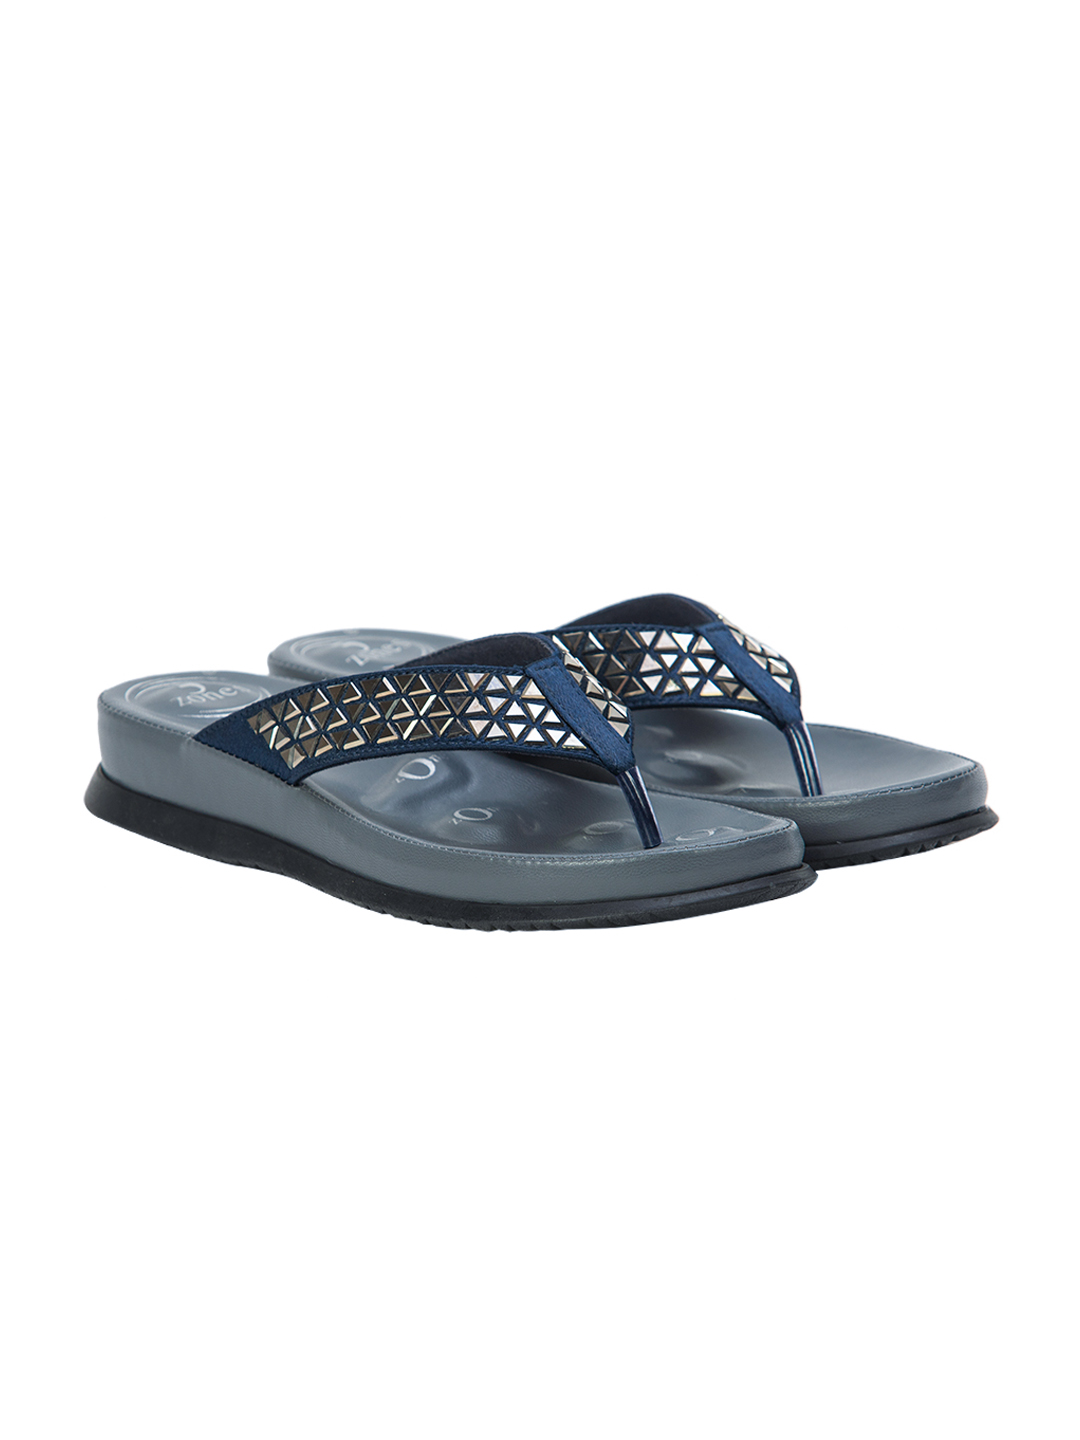 Buy Von Wellx Germany Comfort Beam Blue Slippers Online in Gurgaon